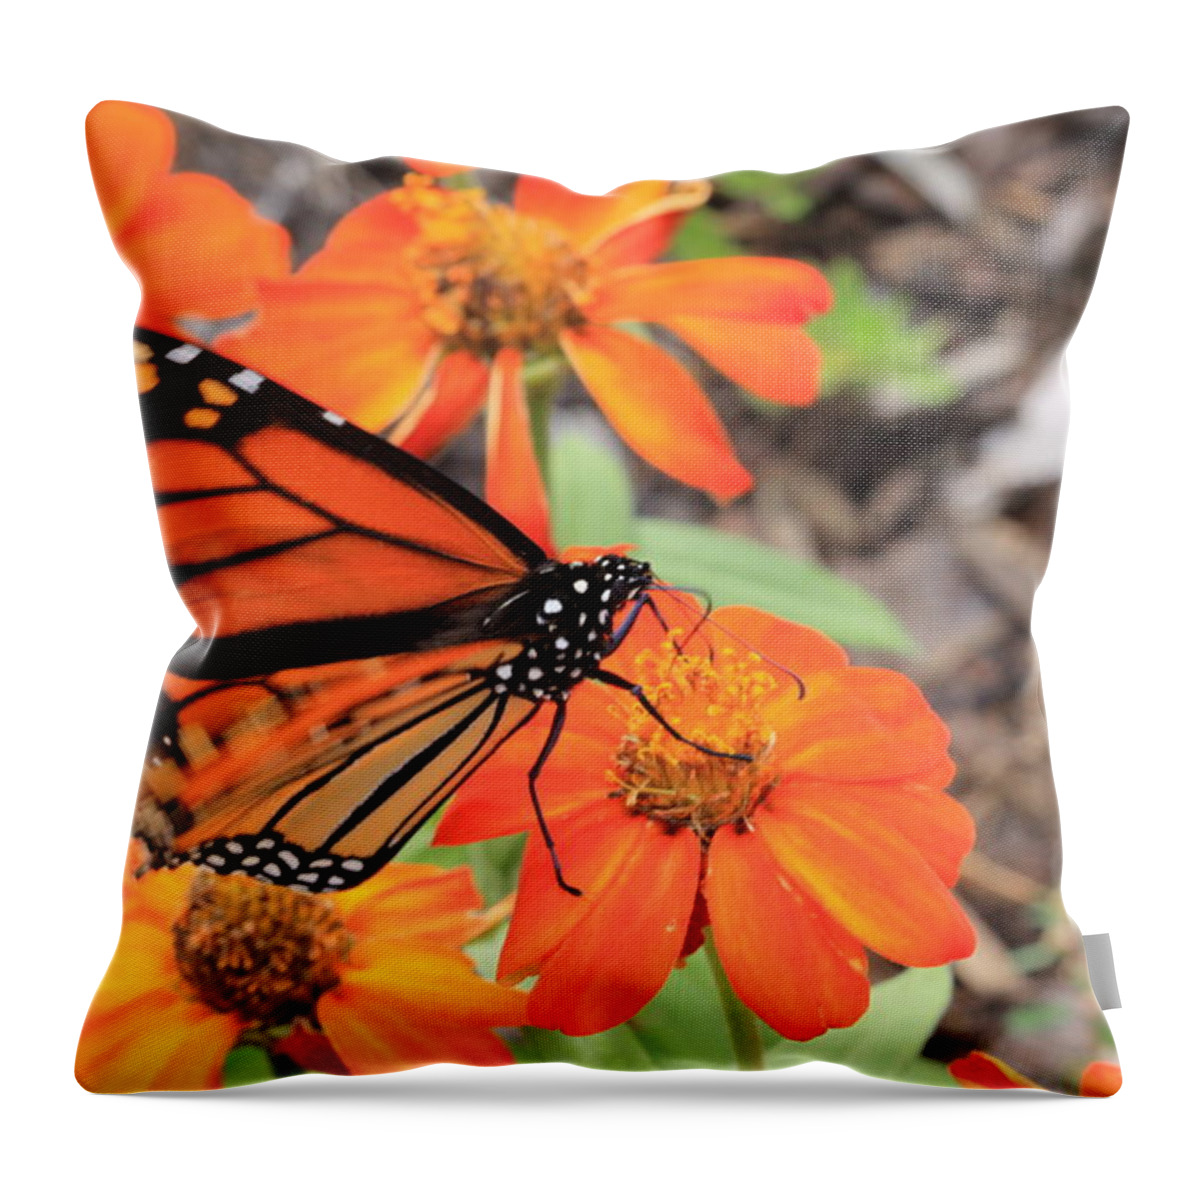 Butterfly Throw Pillow featuring the photograph Butterflies at The Flowering Bridge by Karen Ruhl